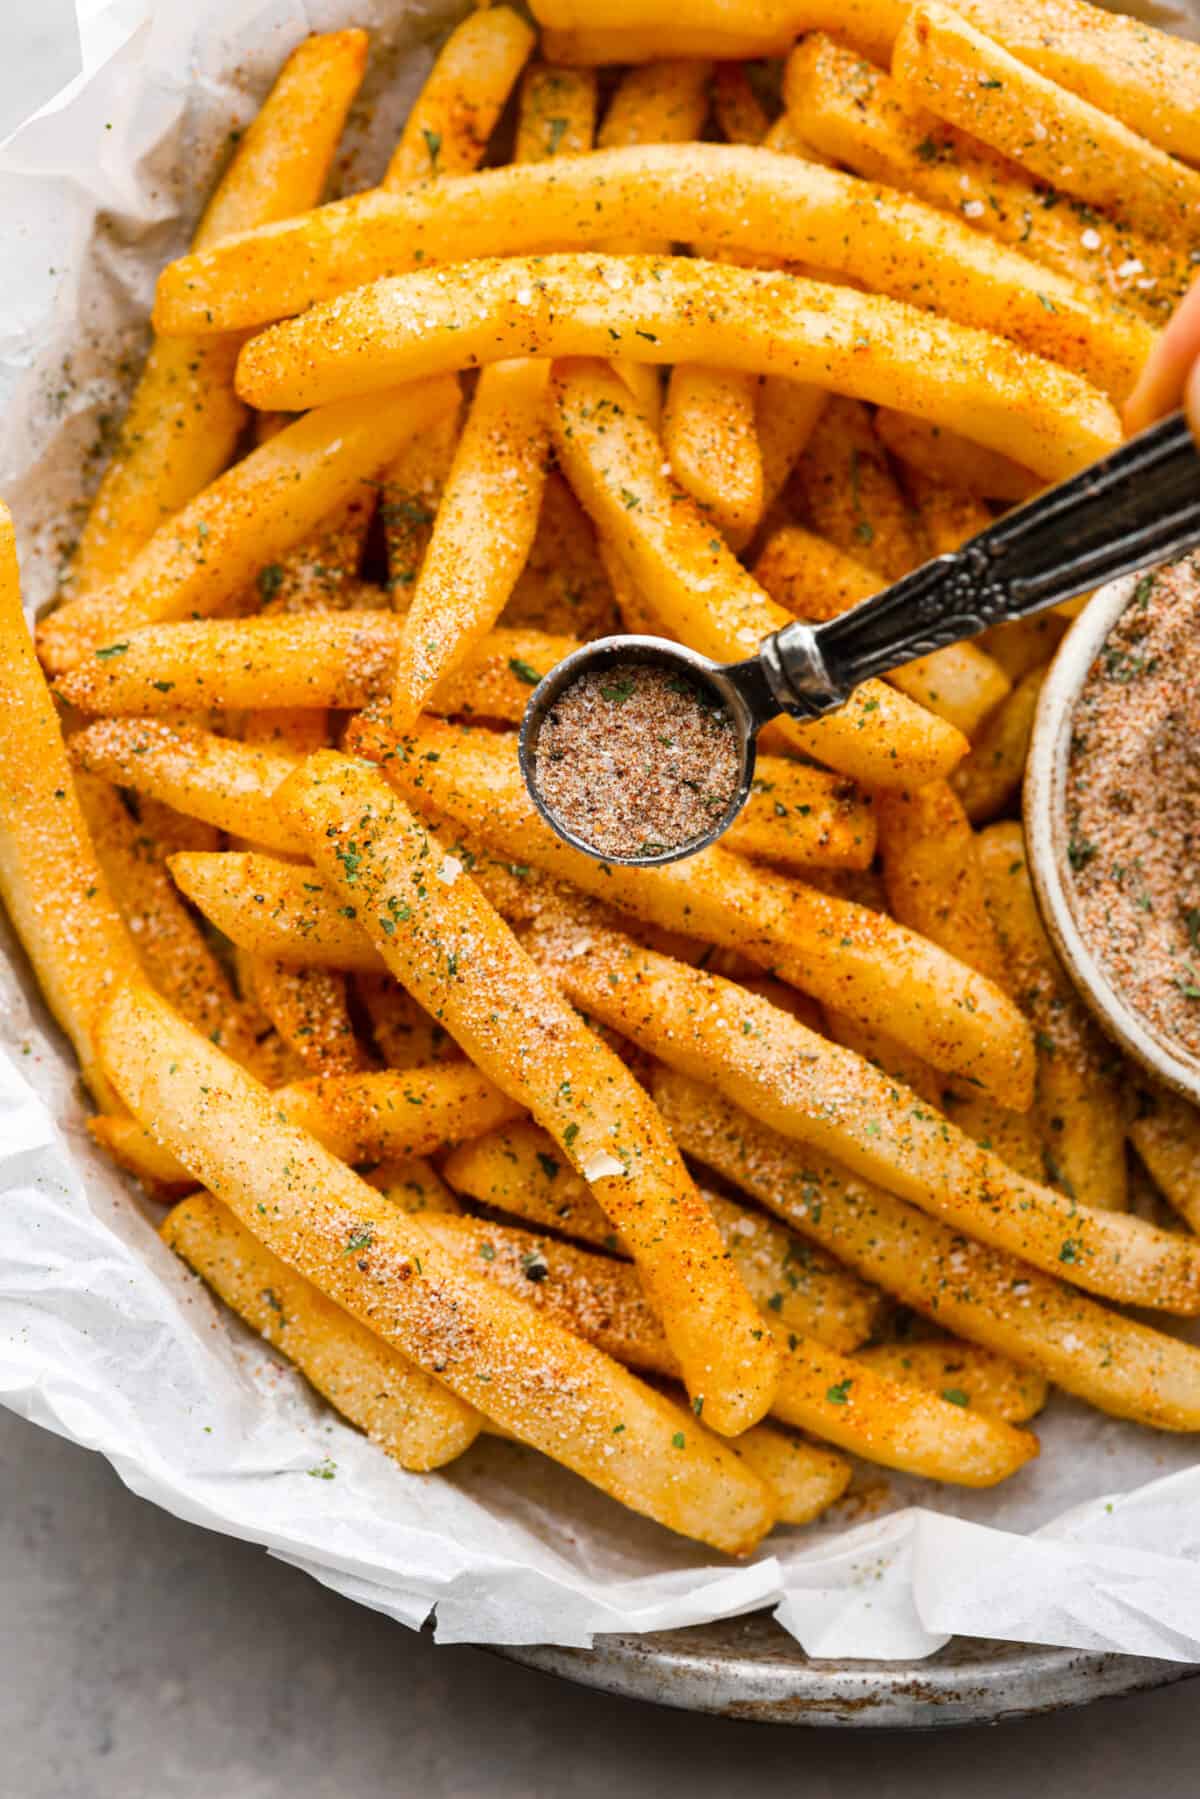 Fry seasoning being sprinkled on French fries.